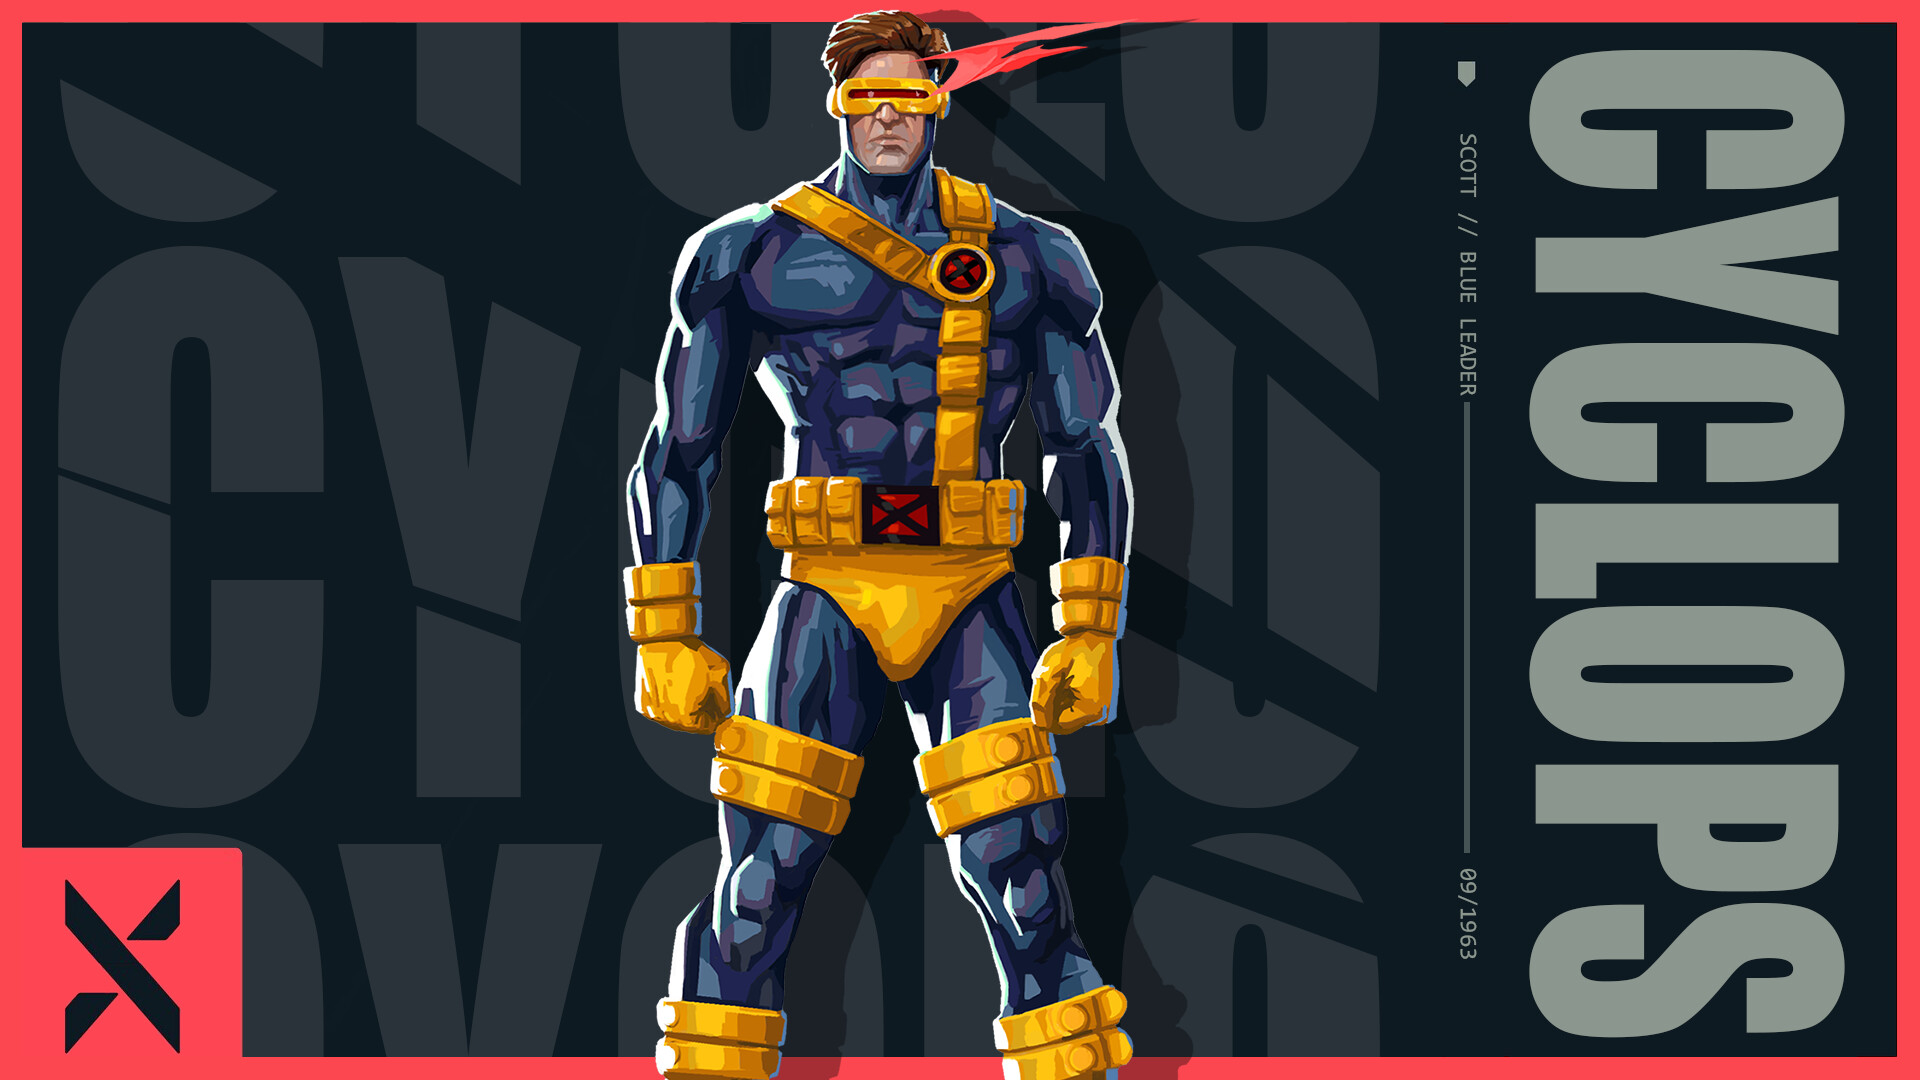 Cyclops wallpaper by ZeusImages  Download on ZEDGE  9fd5